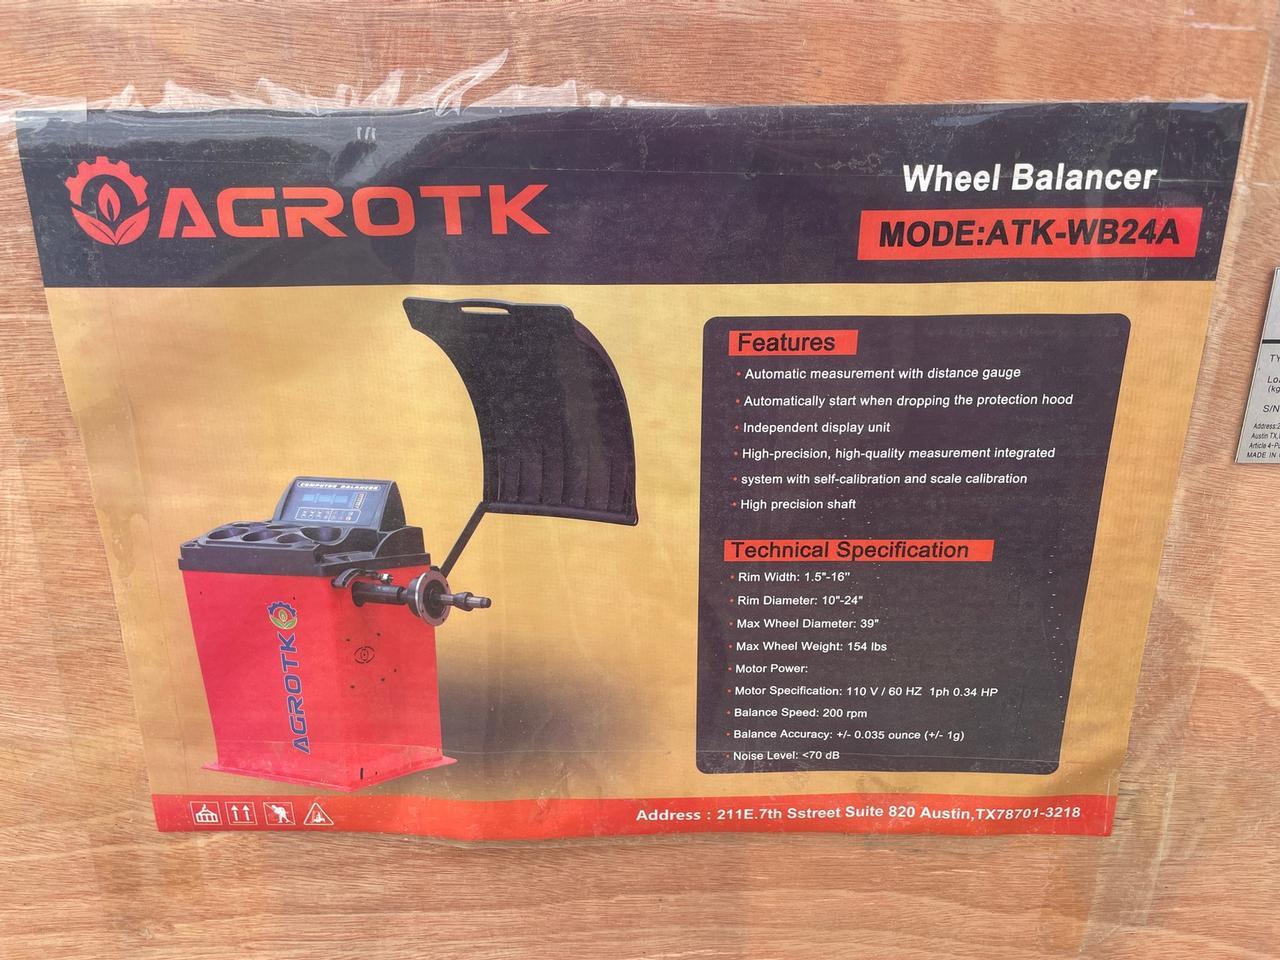 AGROTK ATK-WB24A Tire Balancer